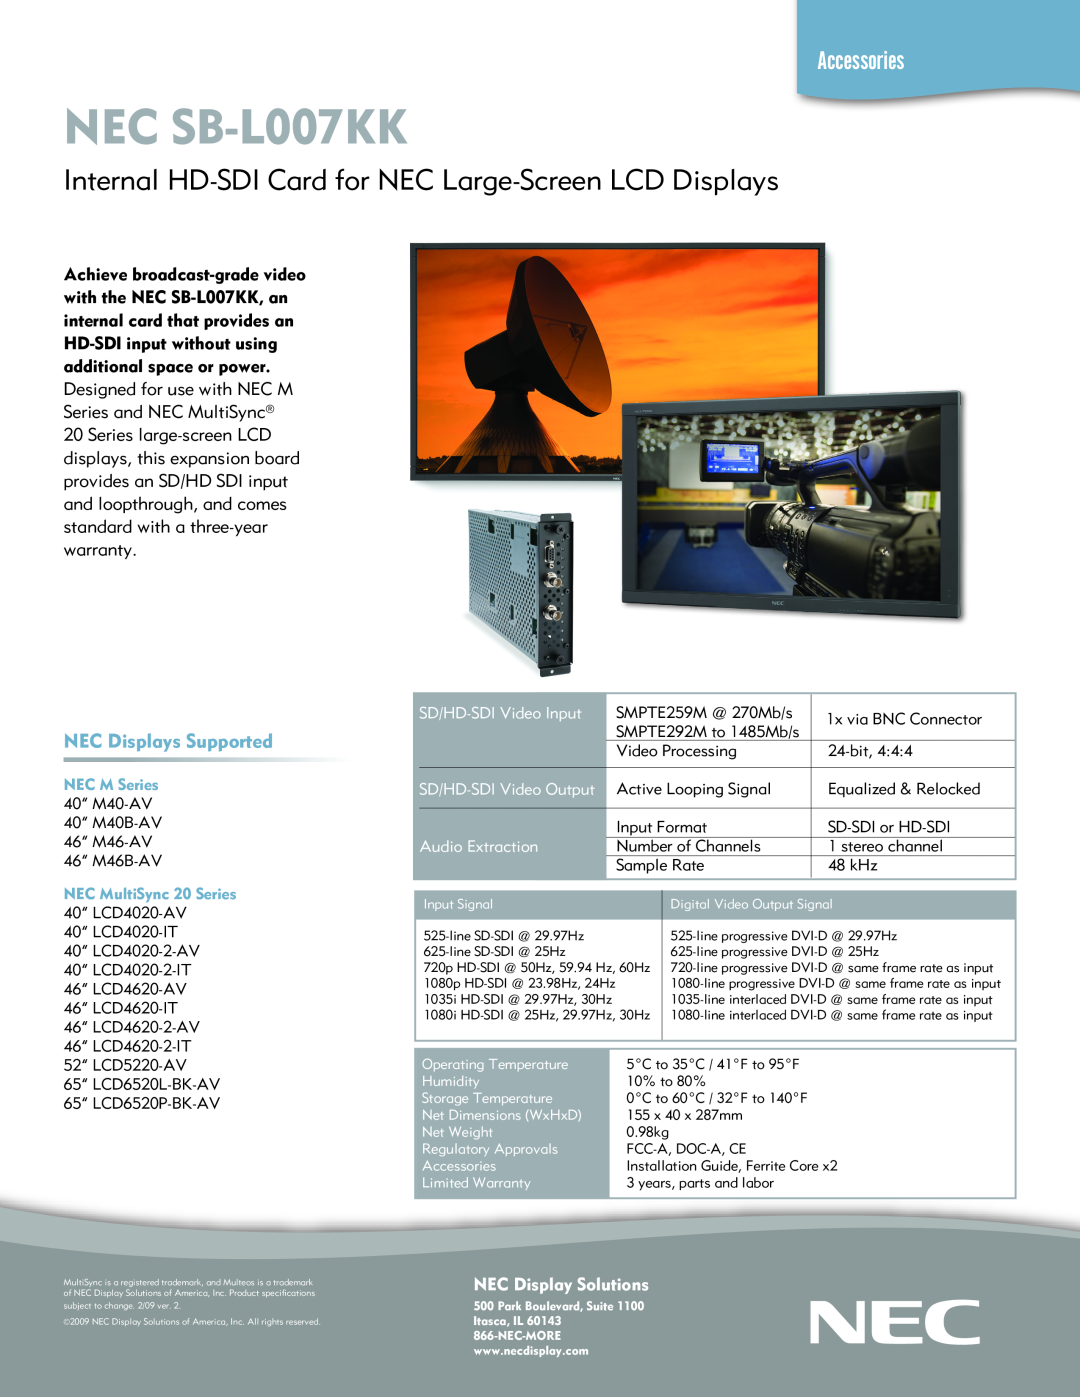 NEC warranty NEC SB-L007KK, Accessories, NEC Displays Supported, NEC Display Solutions, NEC MultiSync 20 Series 